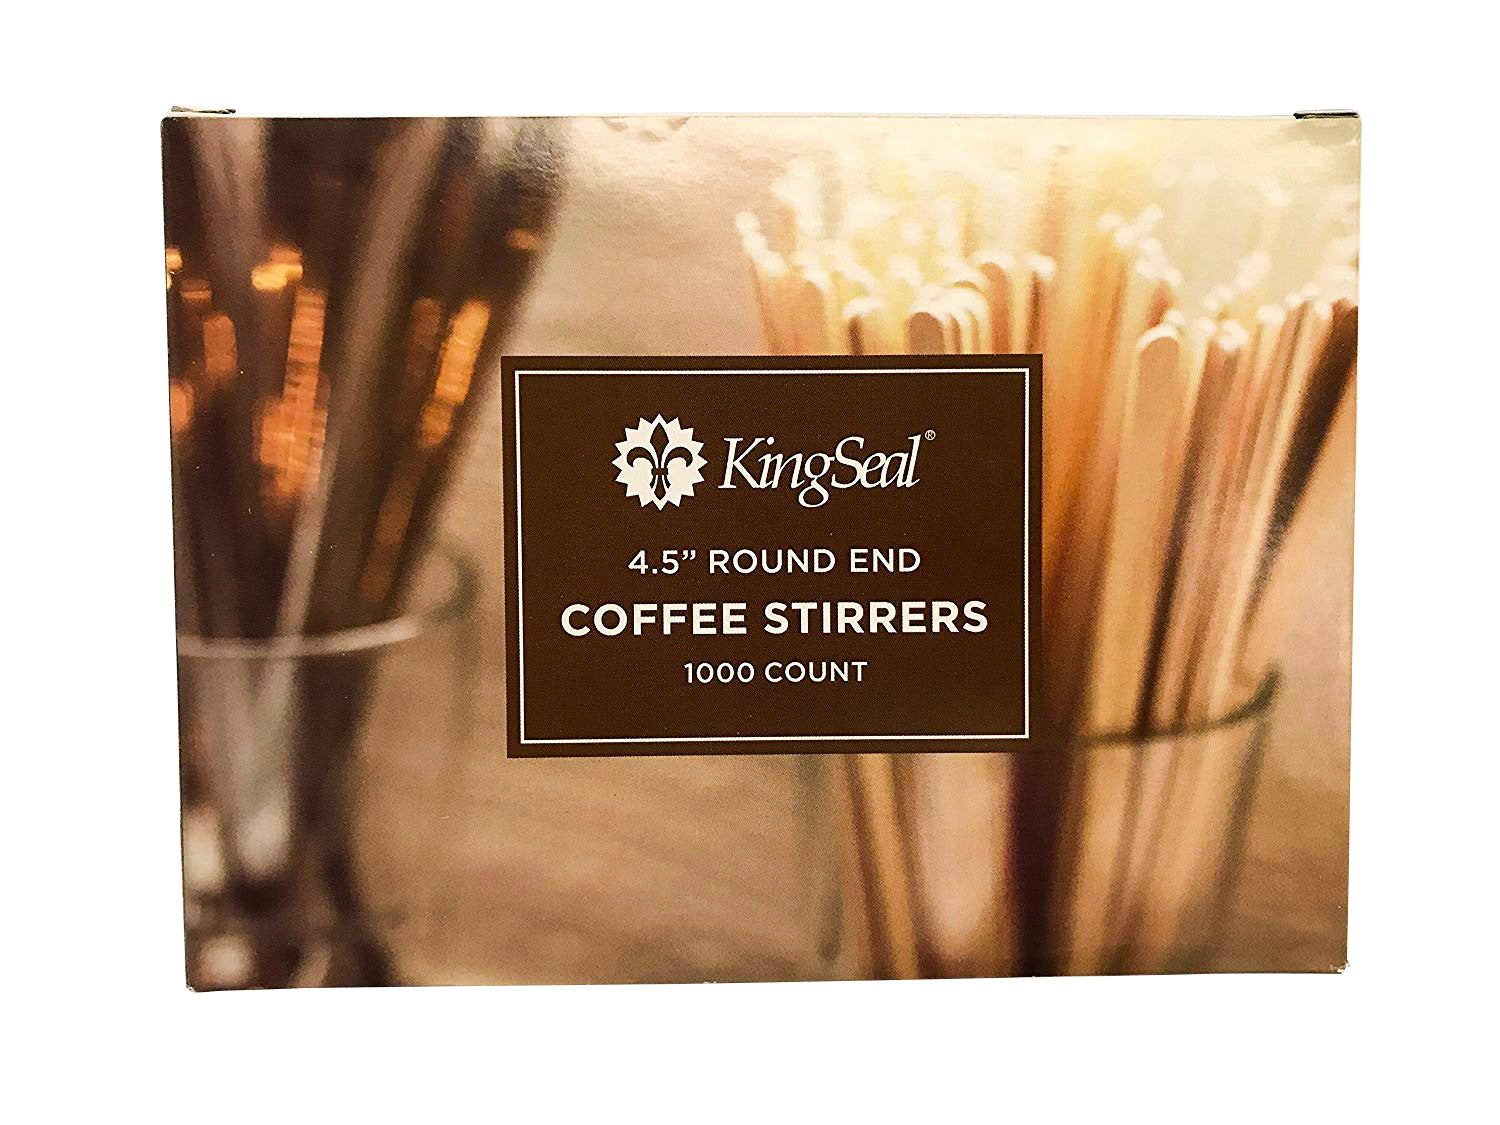 KingSeal Birch Wood Coffee Stirrers, Square End, 5.5 inch - www.